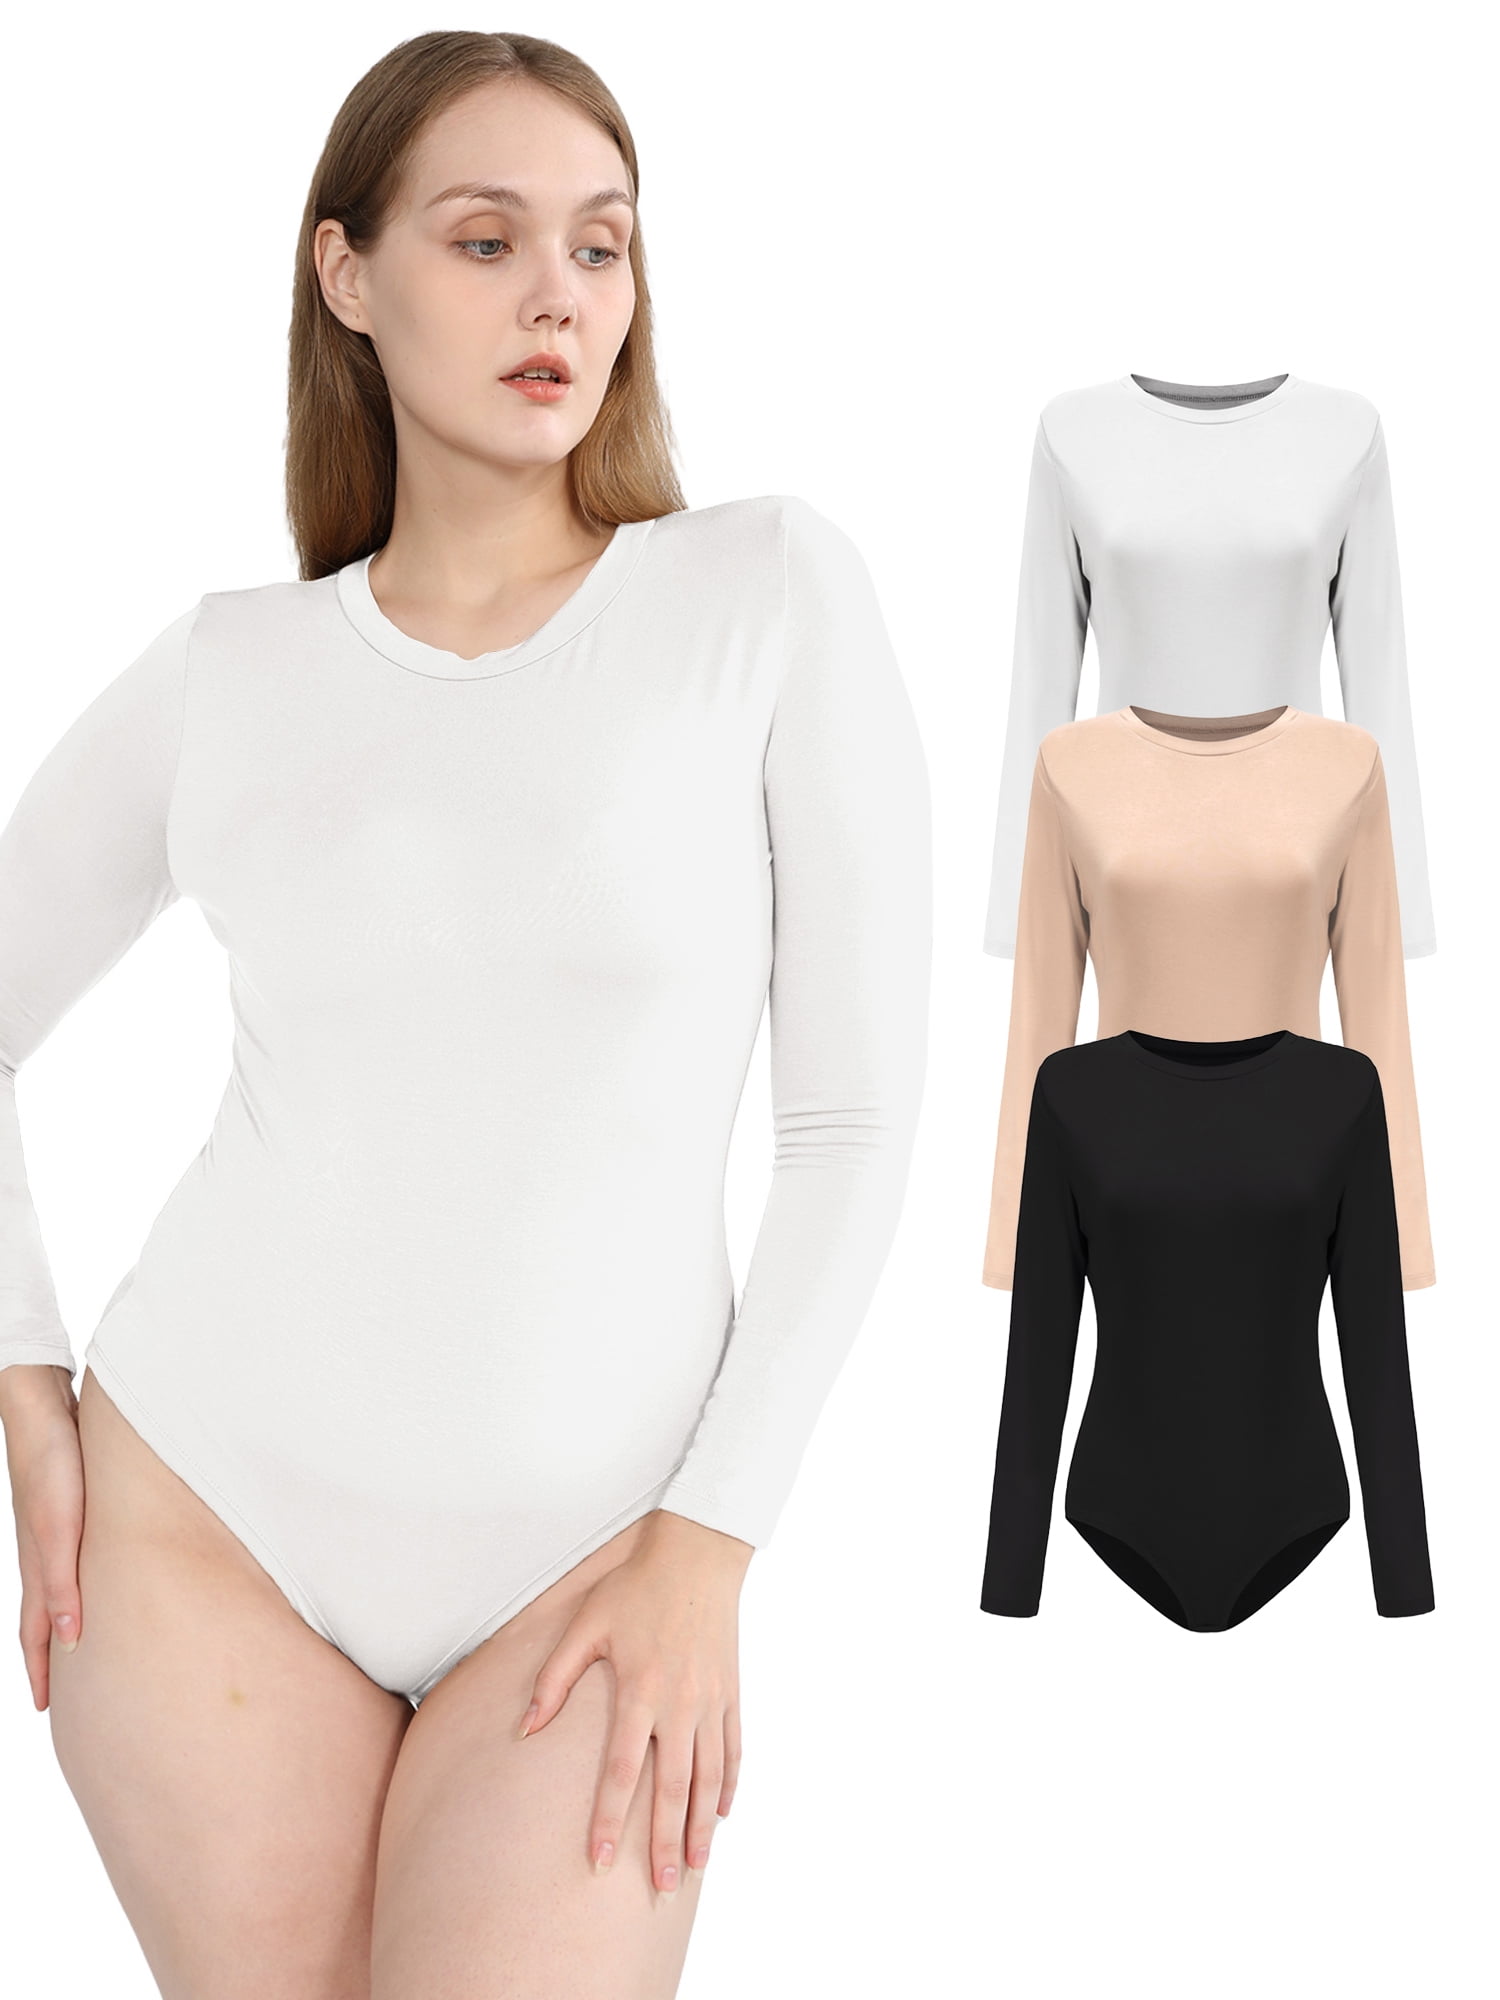 POSESHE Women's Plus Size Long Sleeve Bodysuit, S-5XL